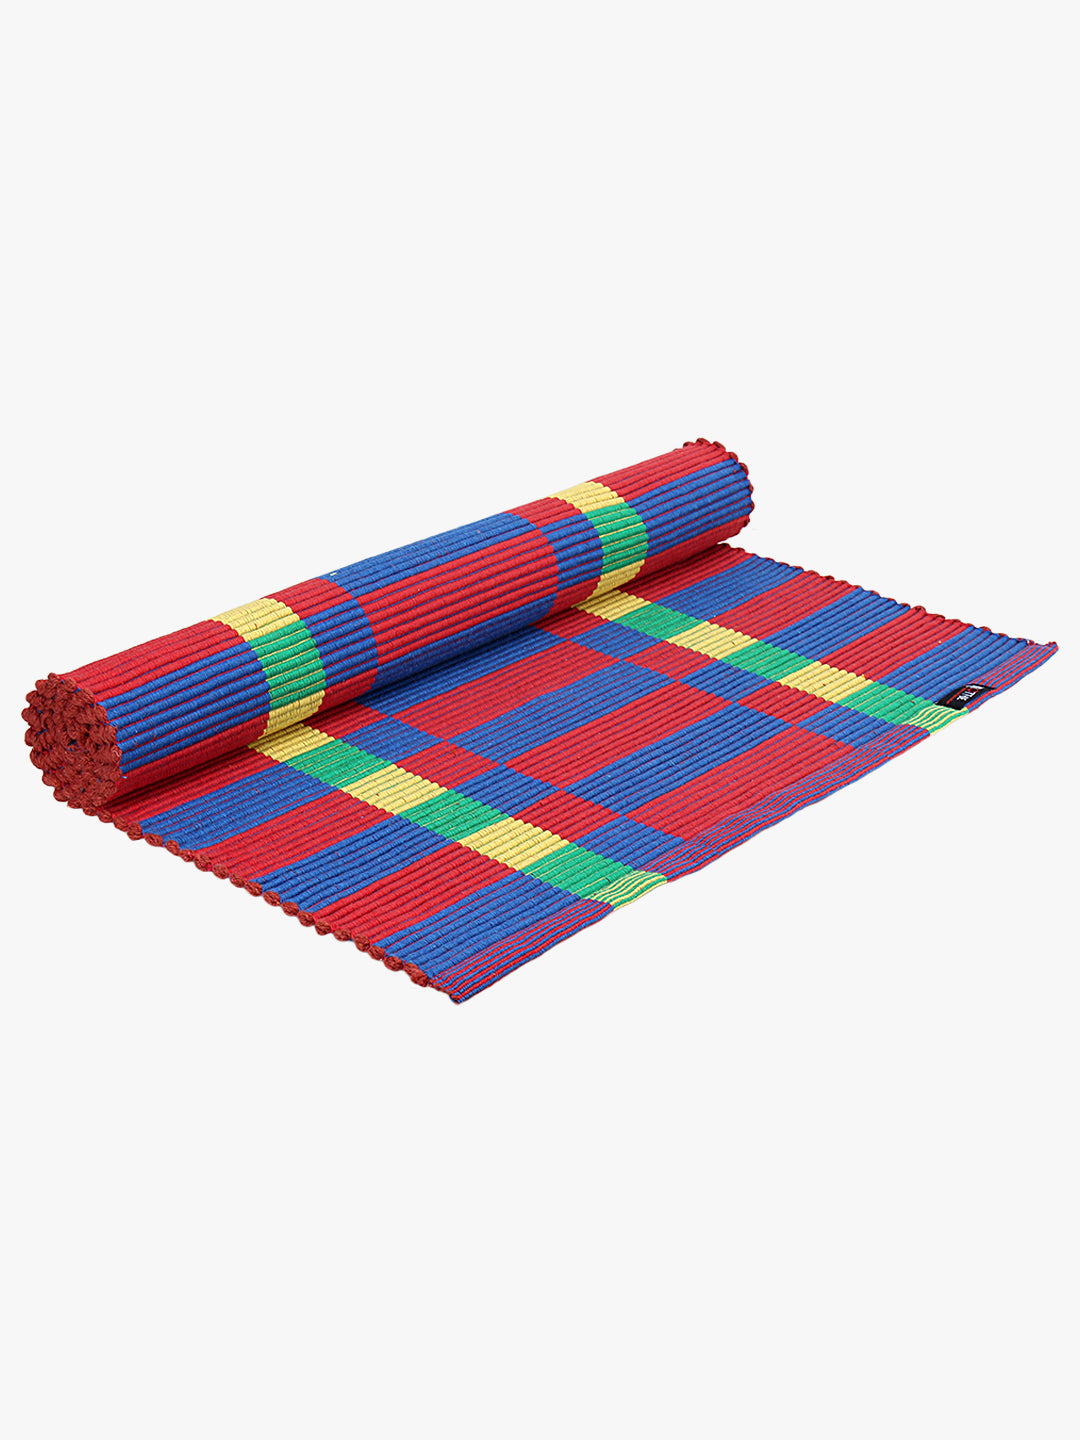 Multicolor Cotton Floor Mats or Dhurries